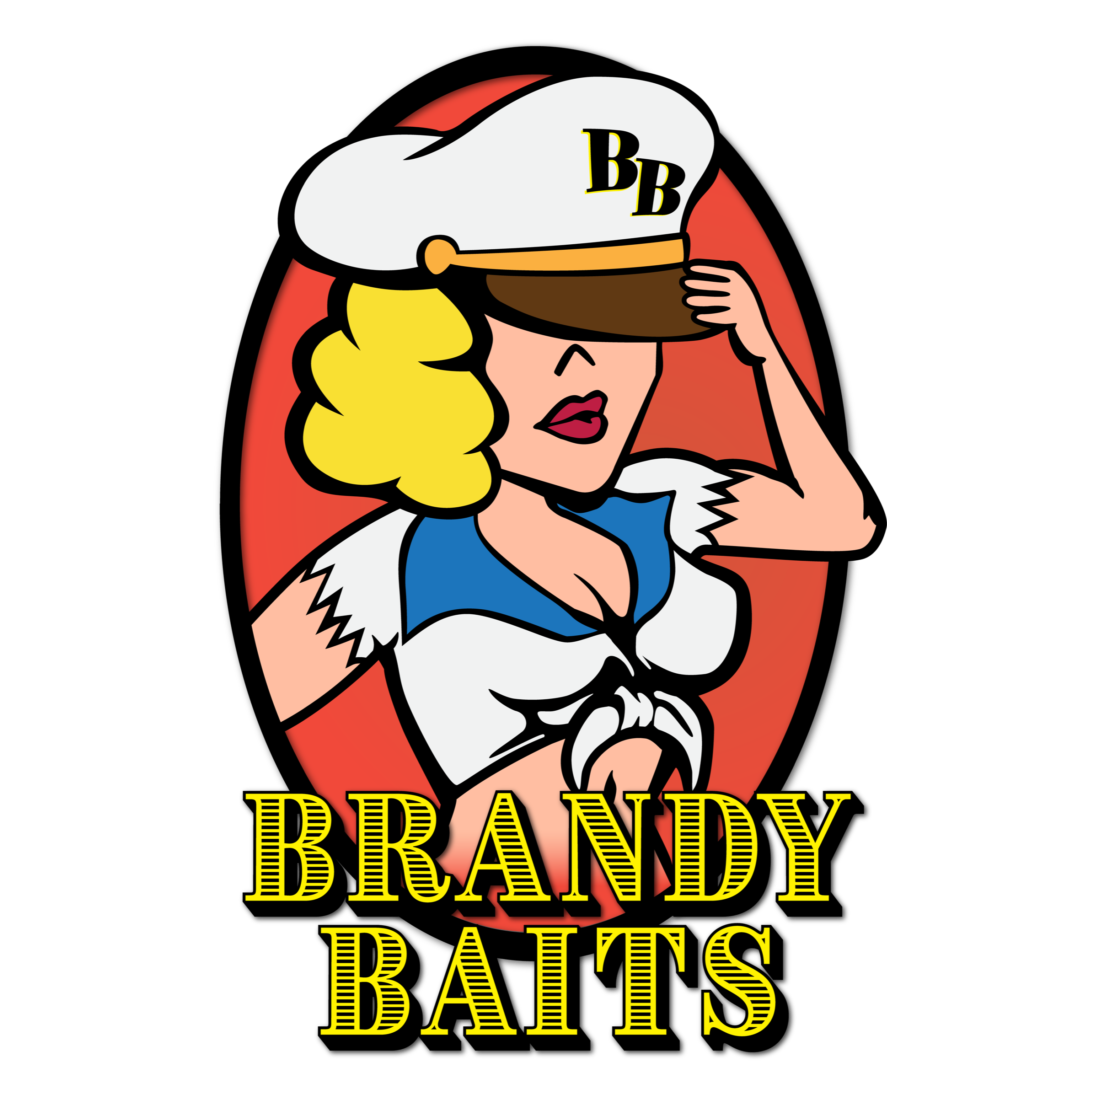 Brandy Baits